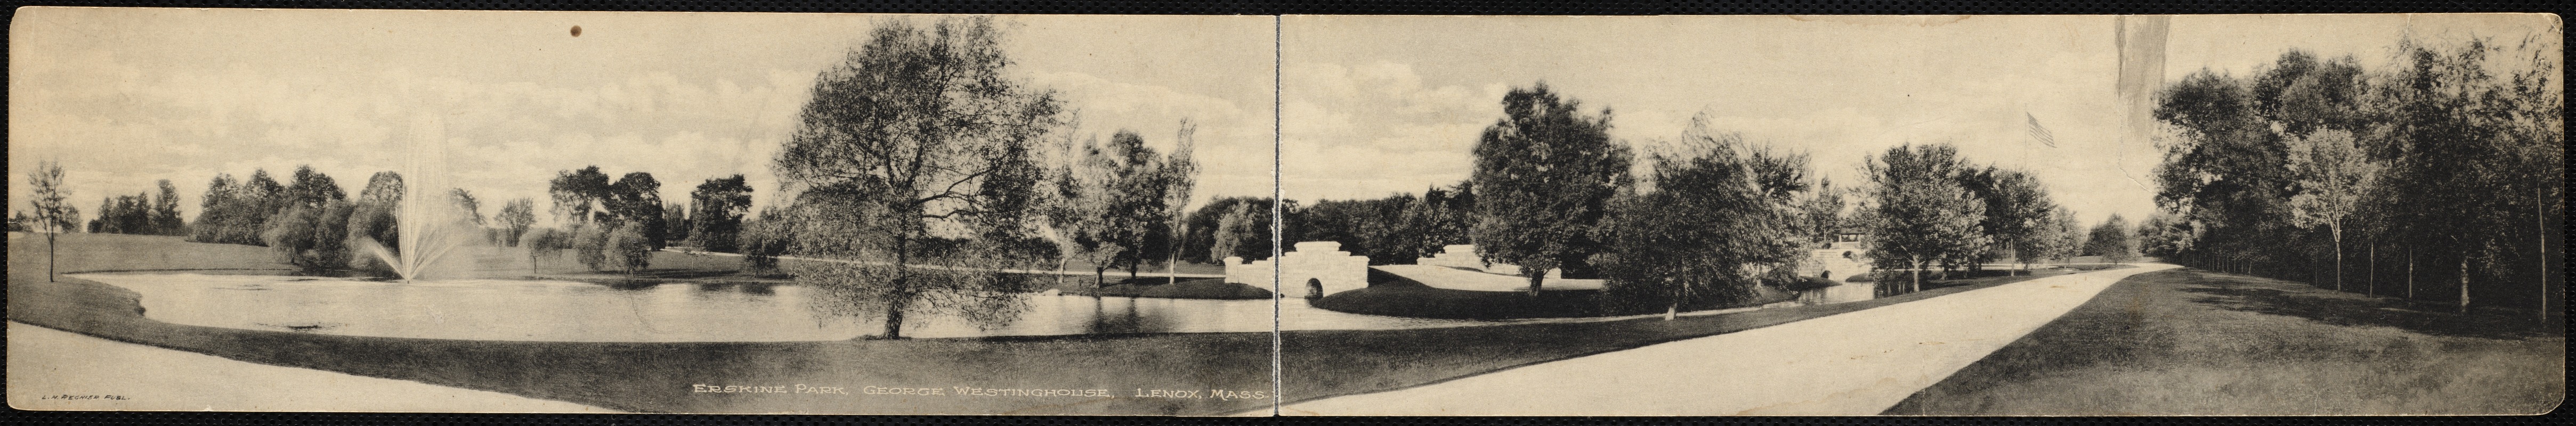 Erskine Park: panorama of grounds